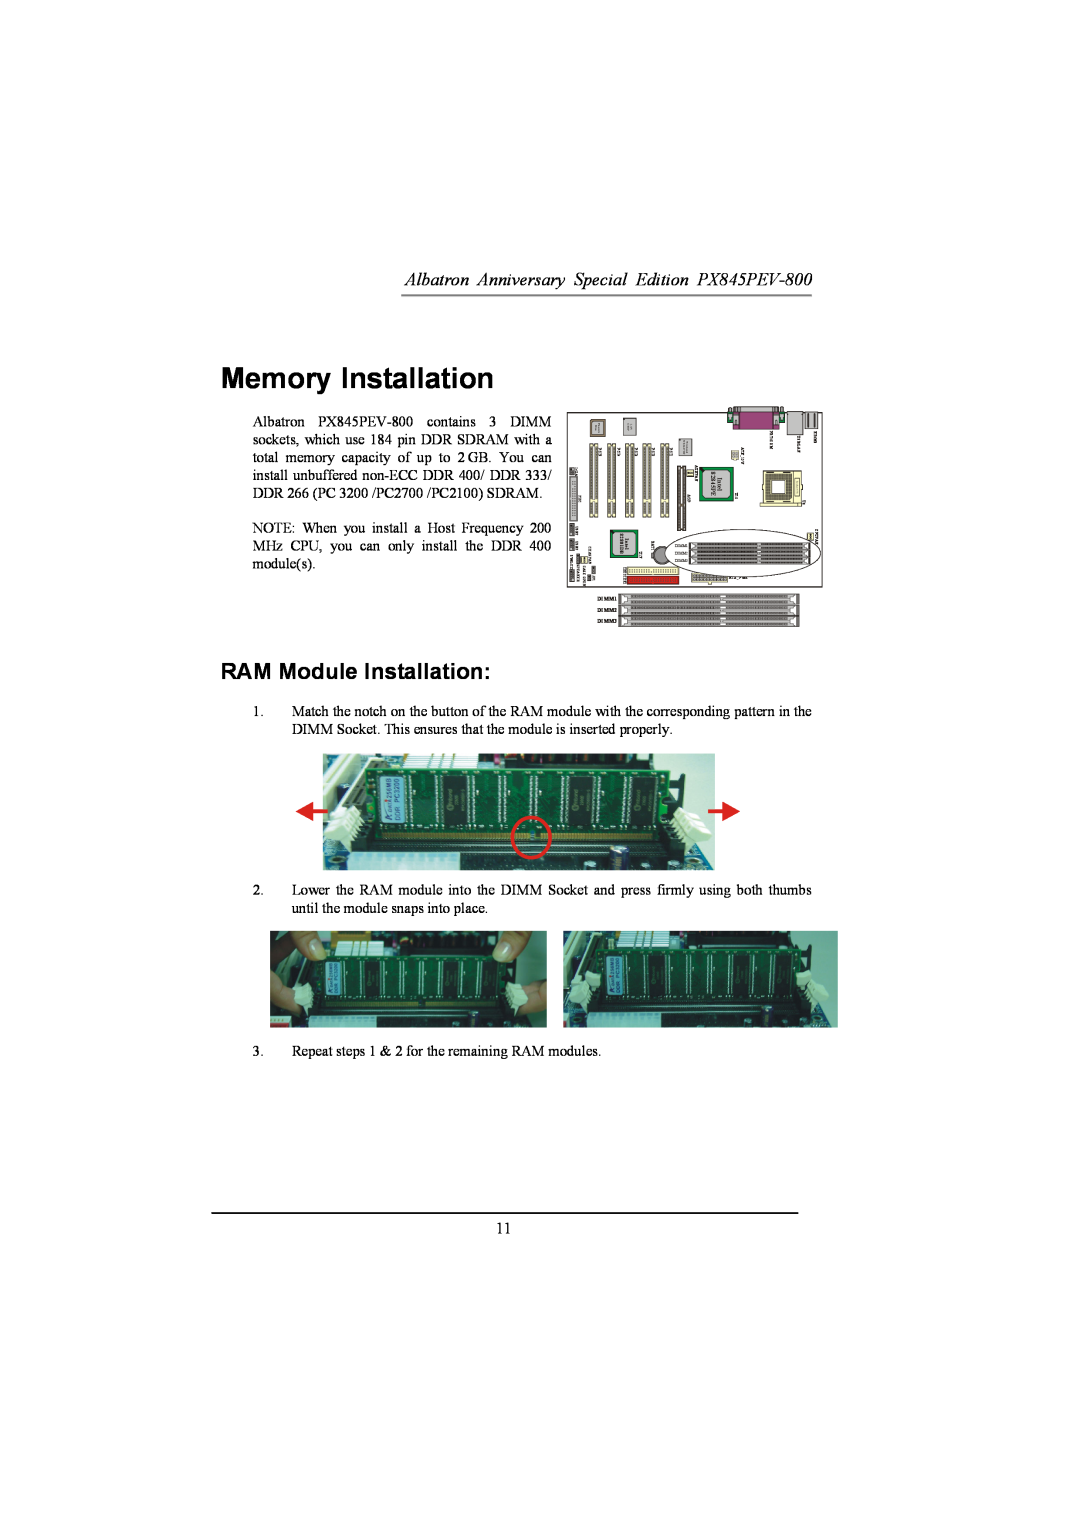 Albatron Technology PX845PEV-800 manual Memory Installation, RAM Module Installation 